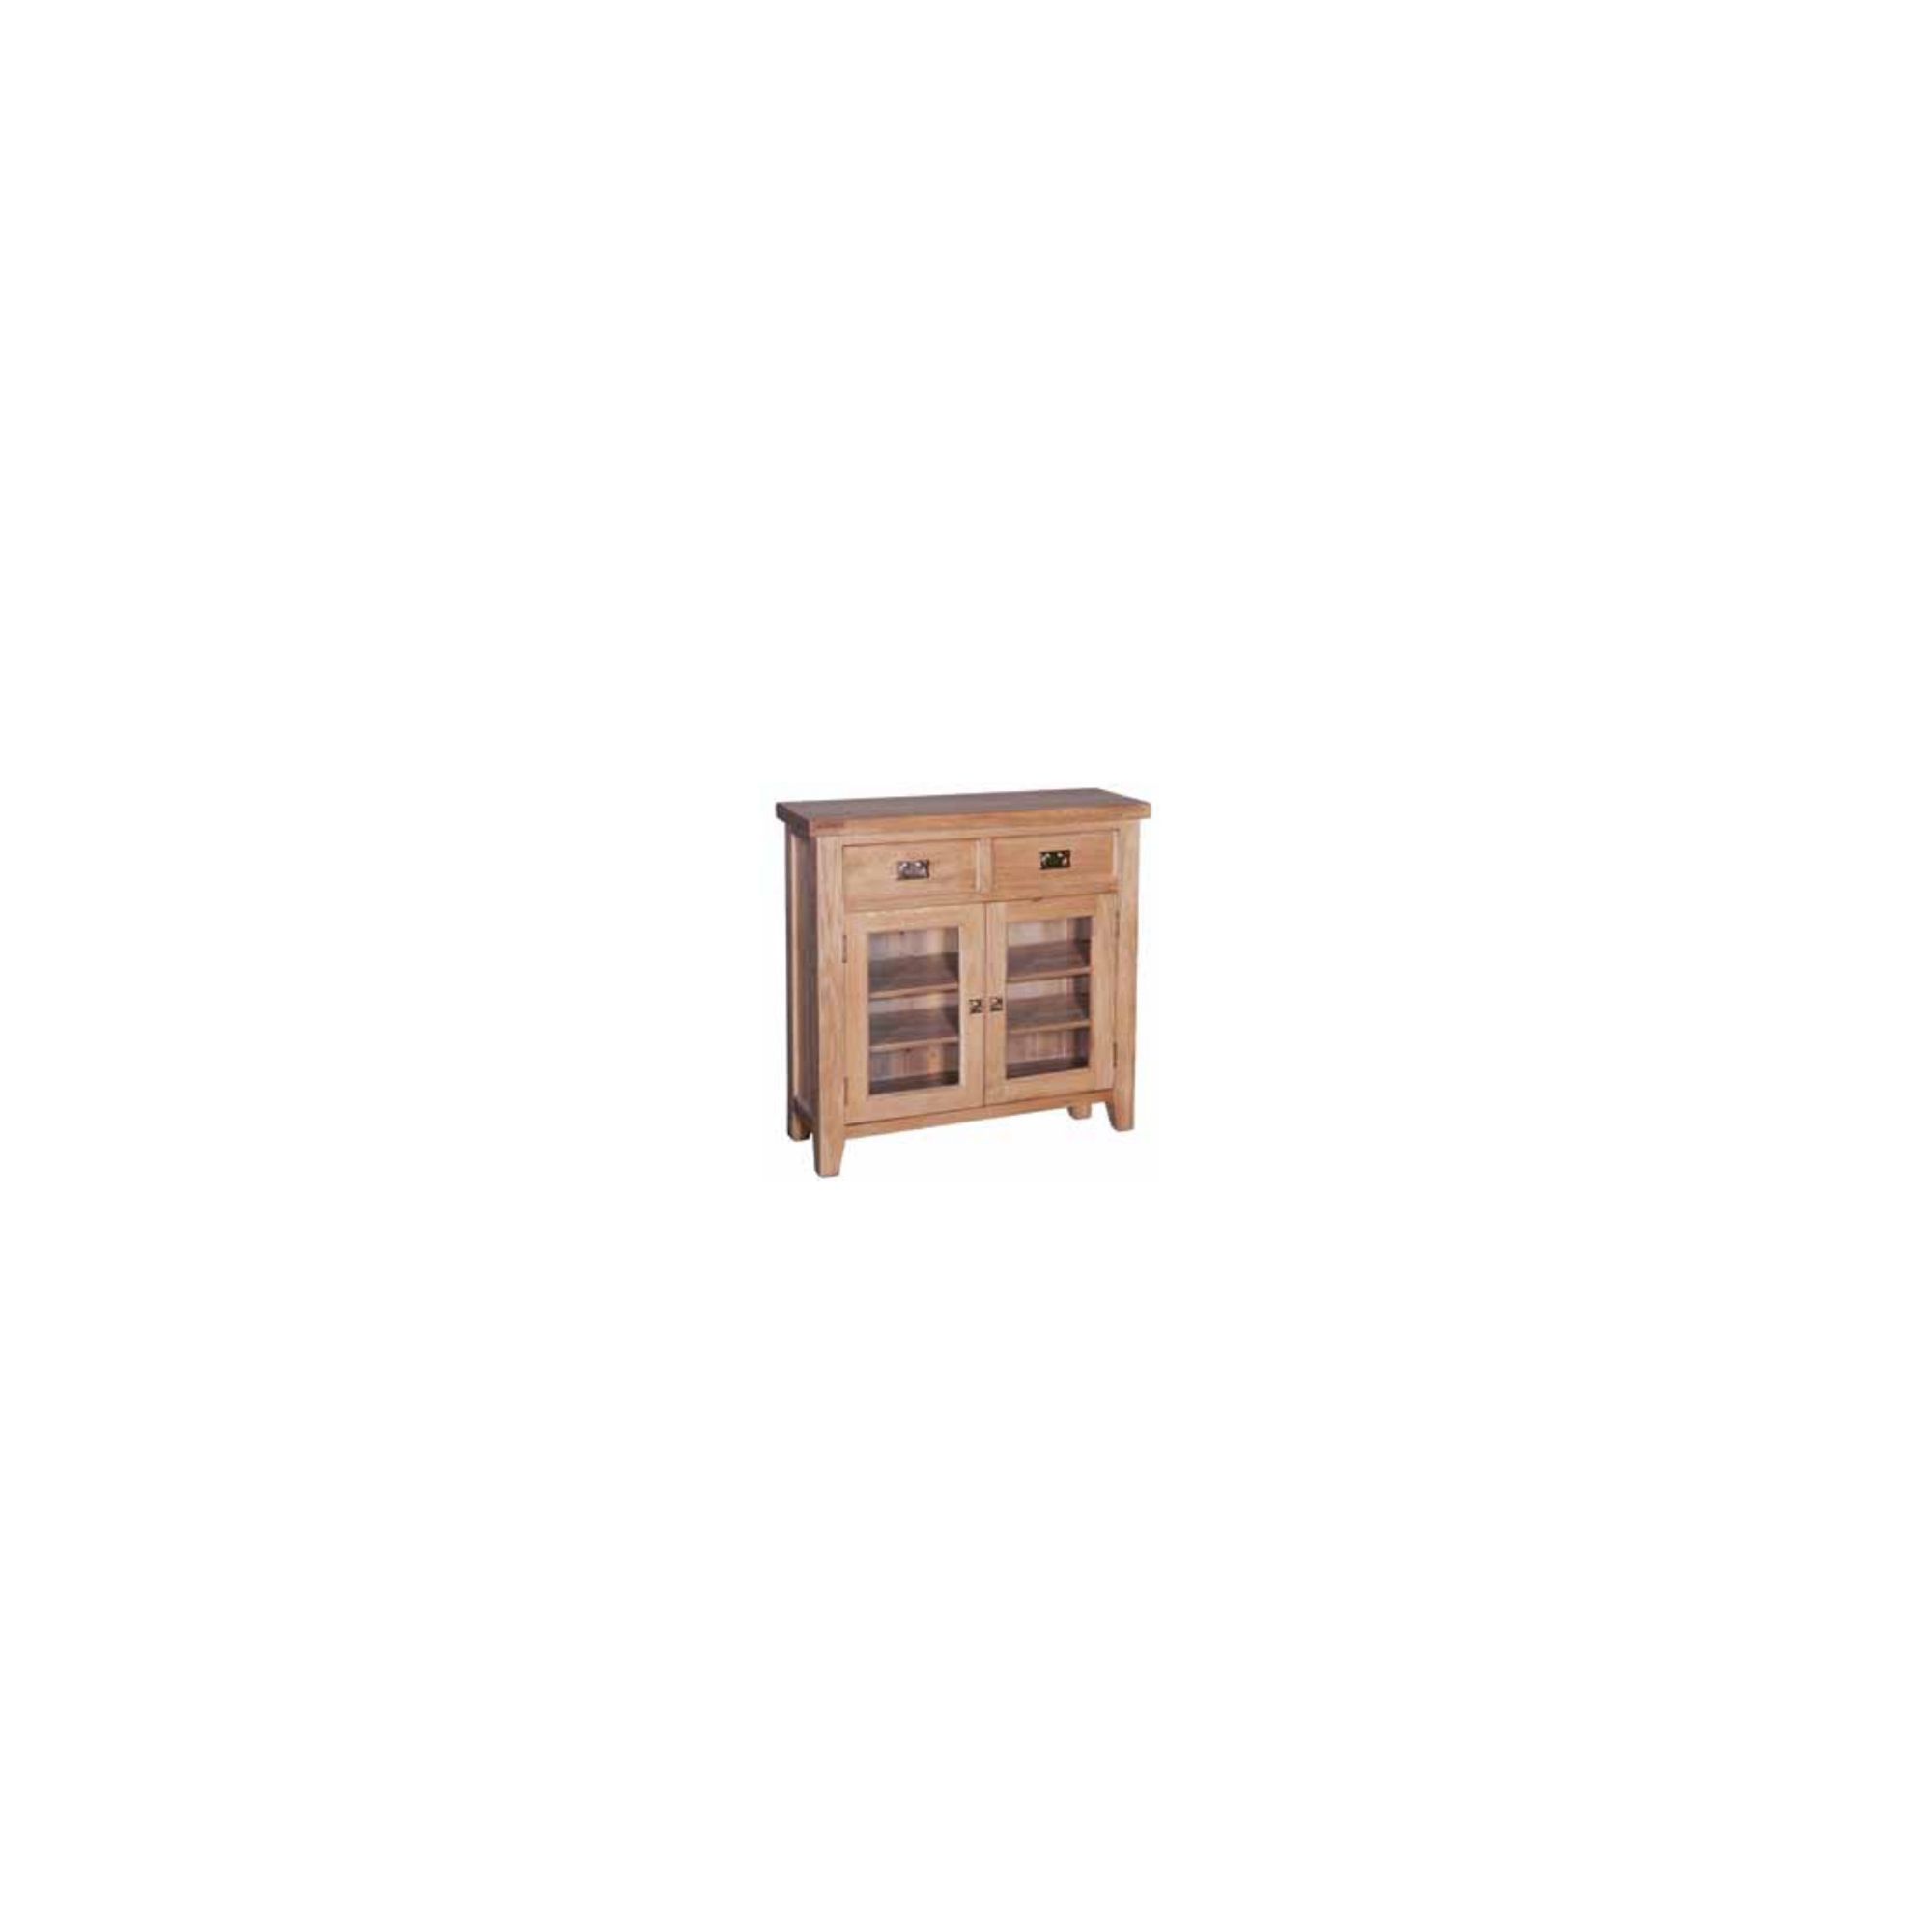 Hawkshead Elegance Small Sideboard with Glass Door at Tesco Direct